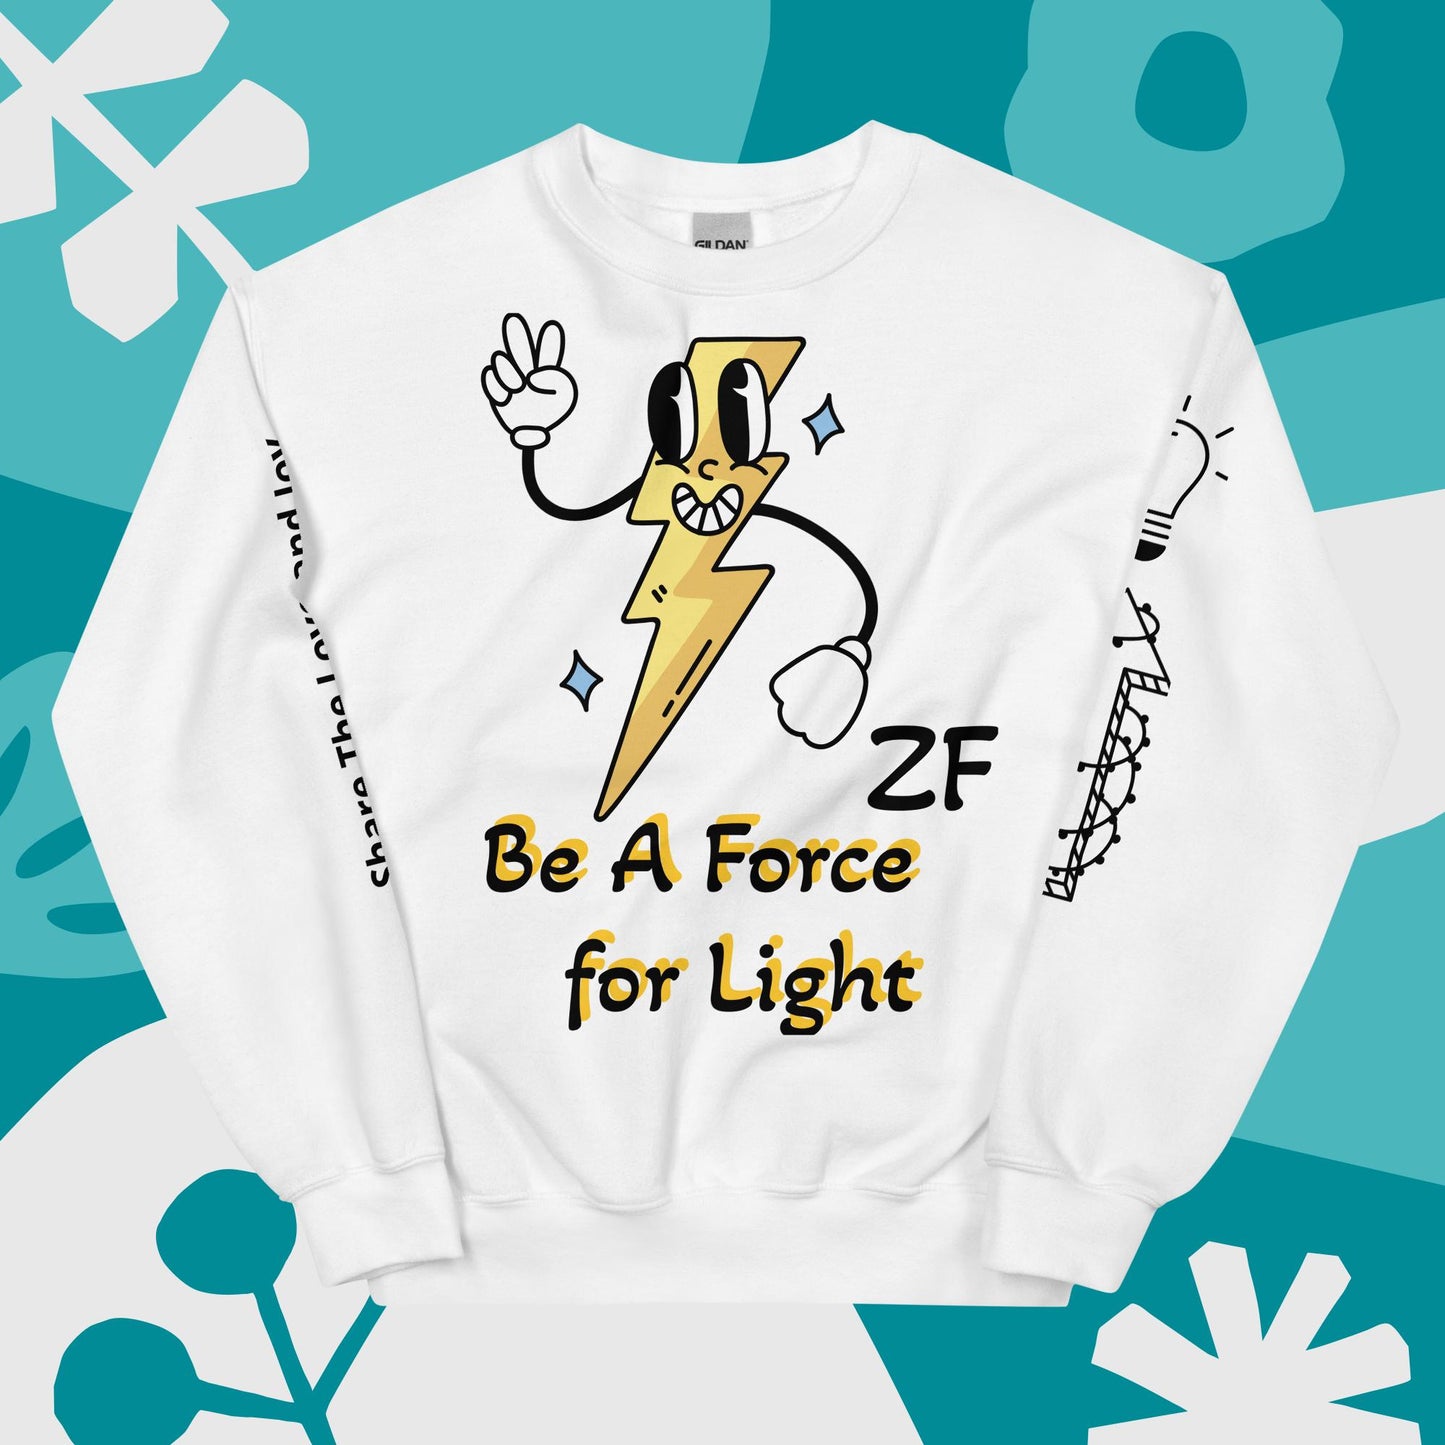 Be The Light Multi-Color Unisex Sweatshirt